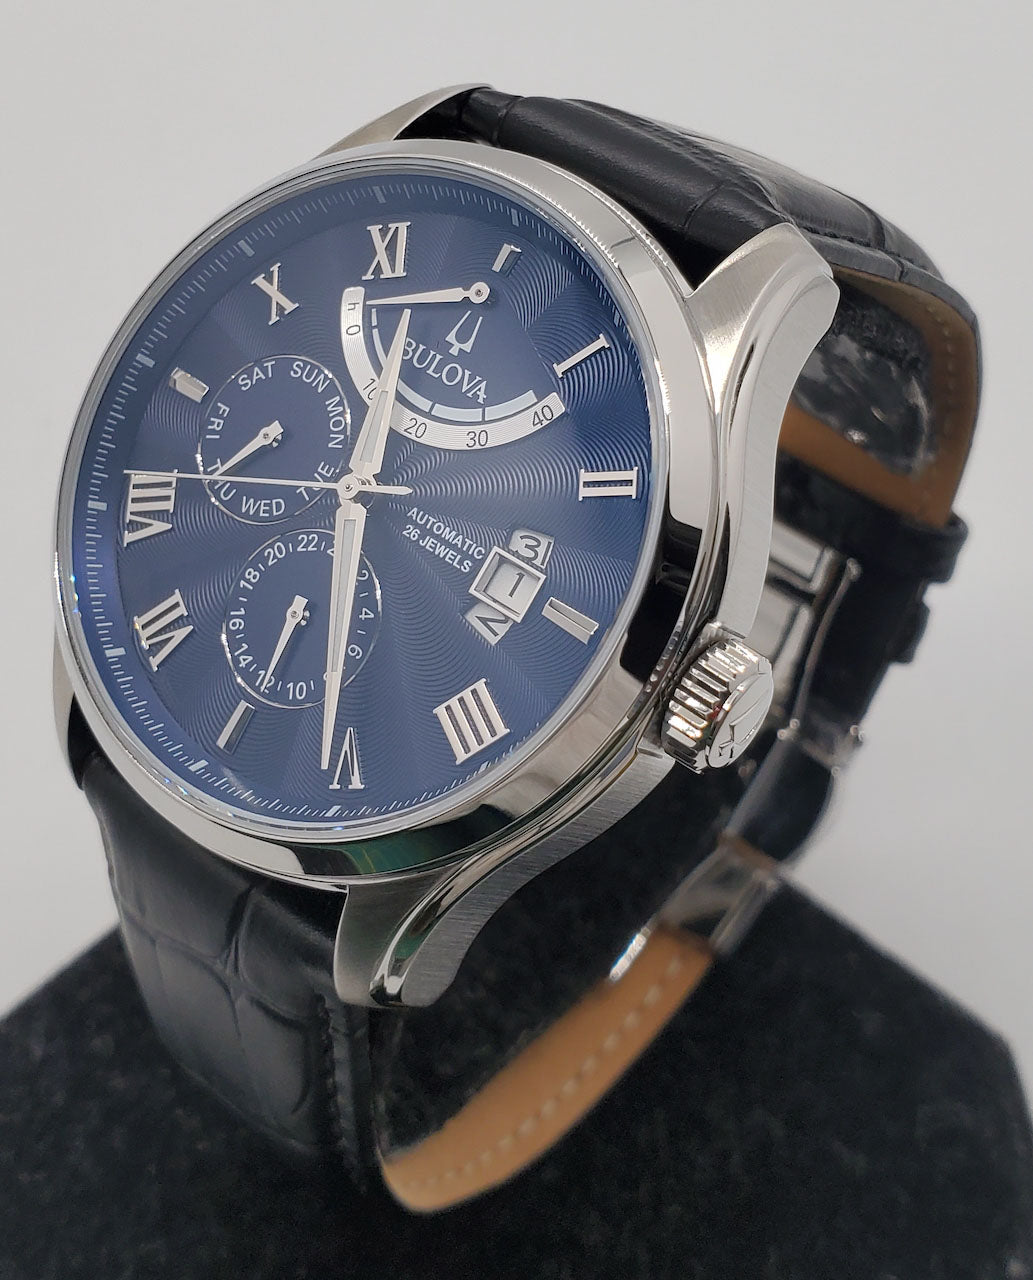 Bulova - Classic Wilton, Blue Dial Leather Automatic Men's Watch - 96C142